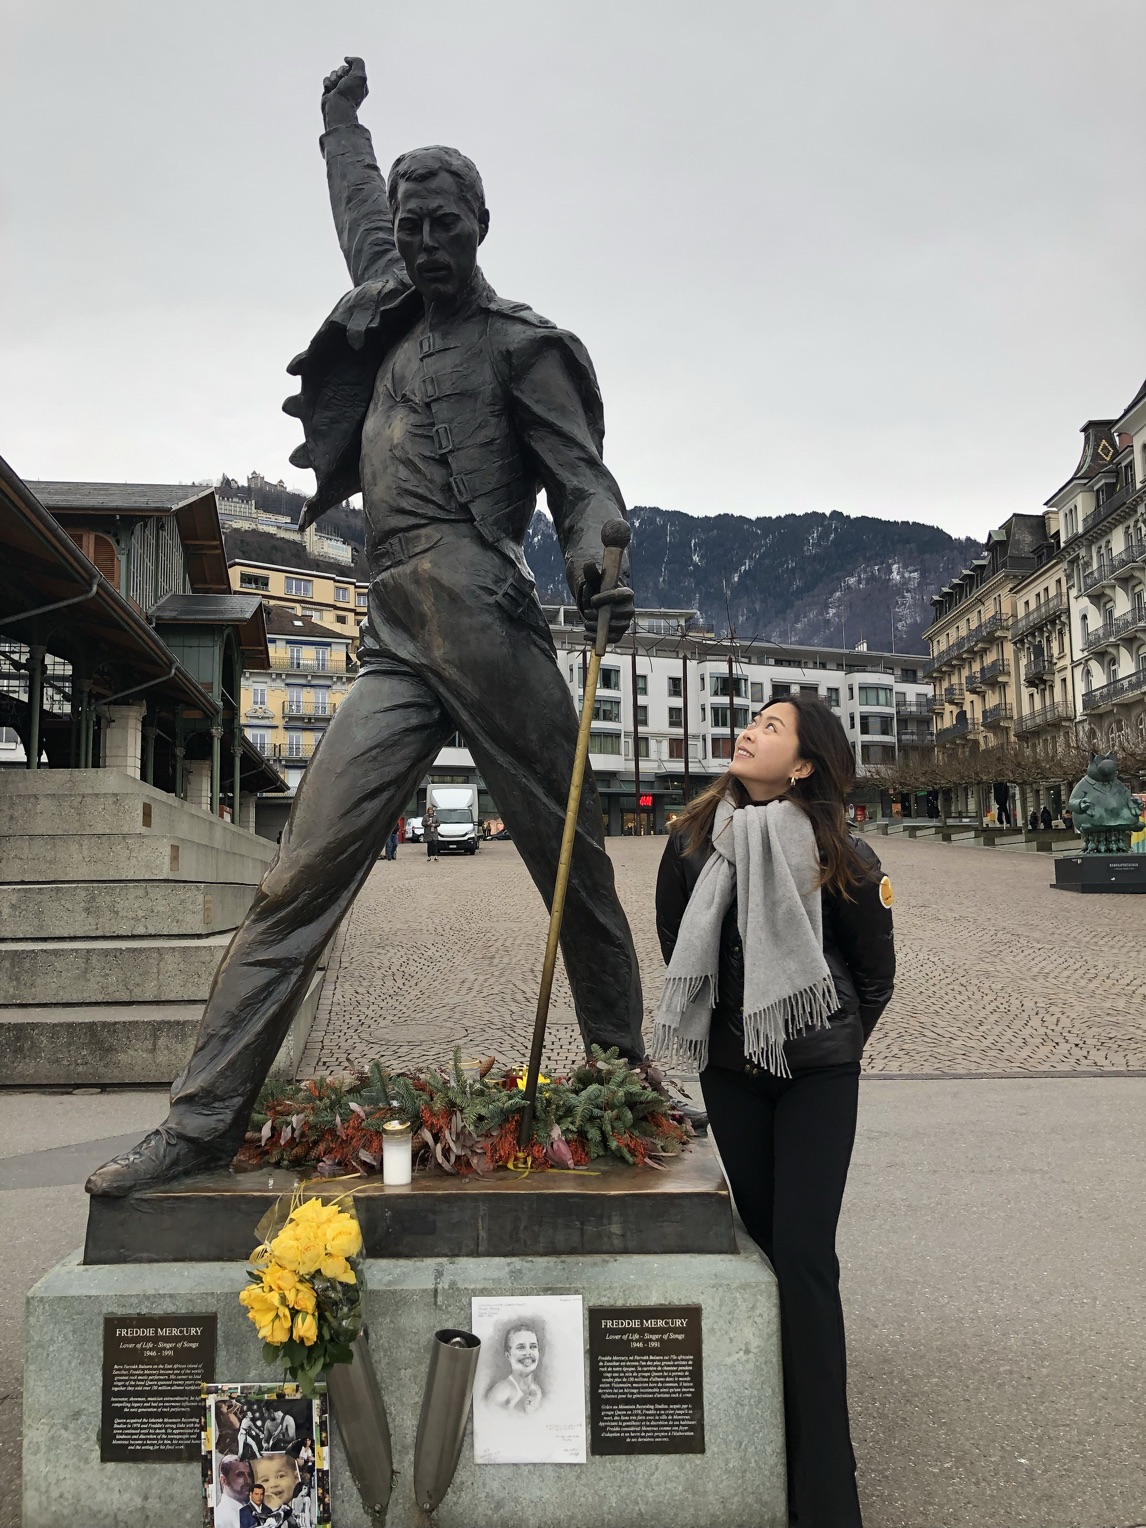 A tribute to Freddie Mercury in Montreux 🇨🇭 | Trip.com Montreux